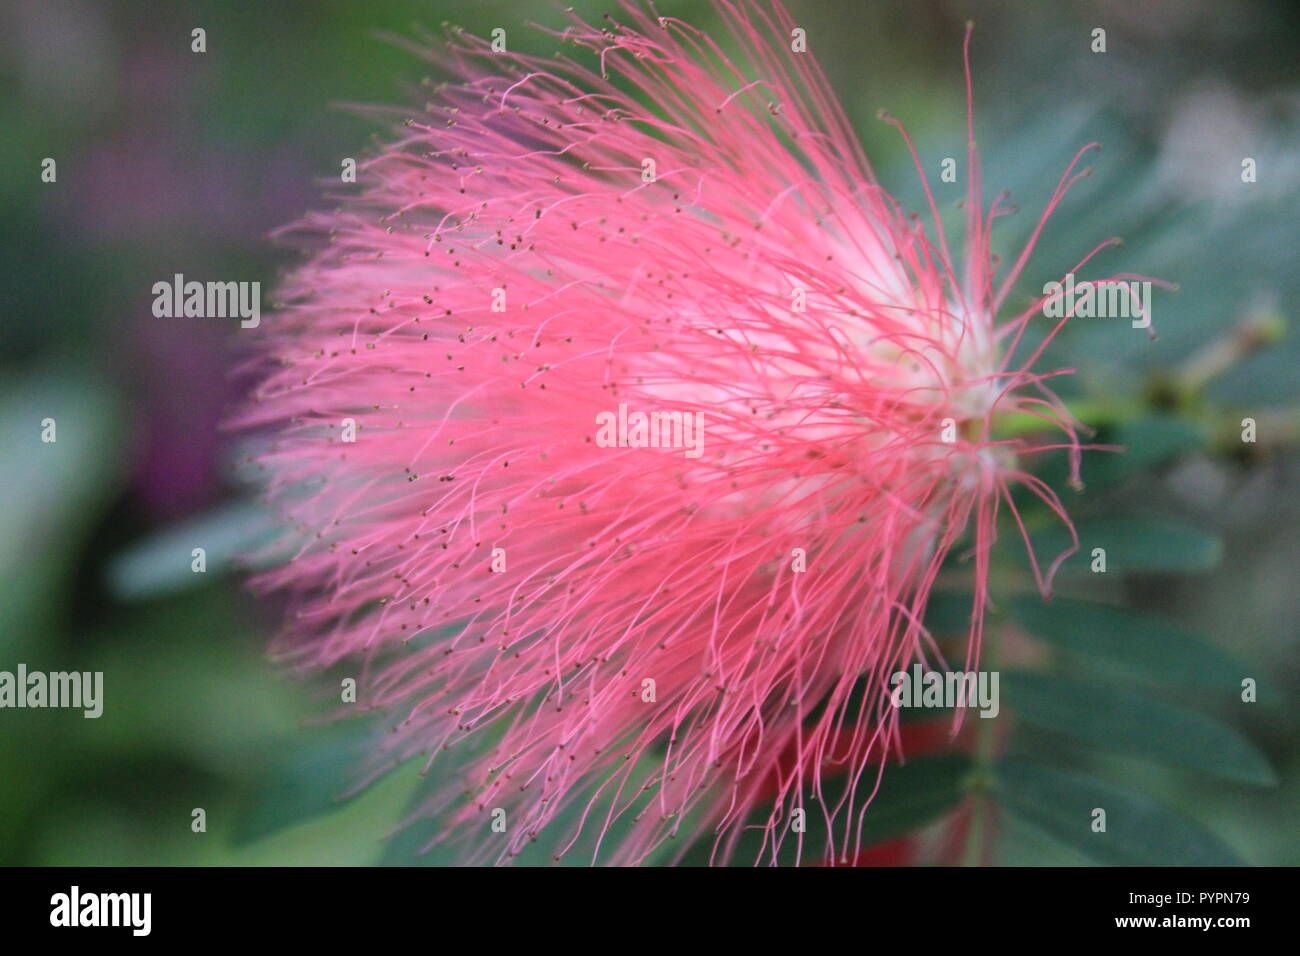 Calliandra surinamensis, pink powder puff, C. surinamensis, beautiful flowering plants growing in the flower garden. Stock Photo